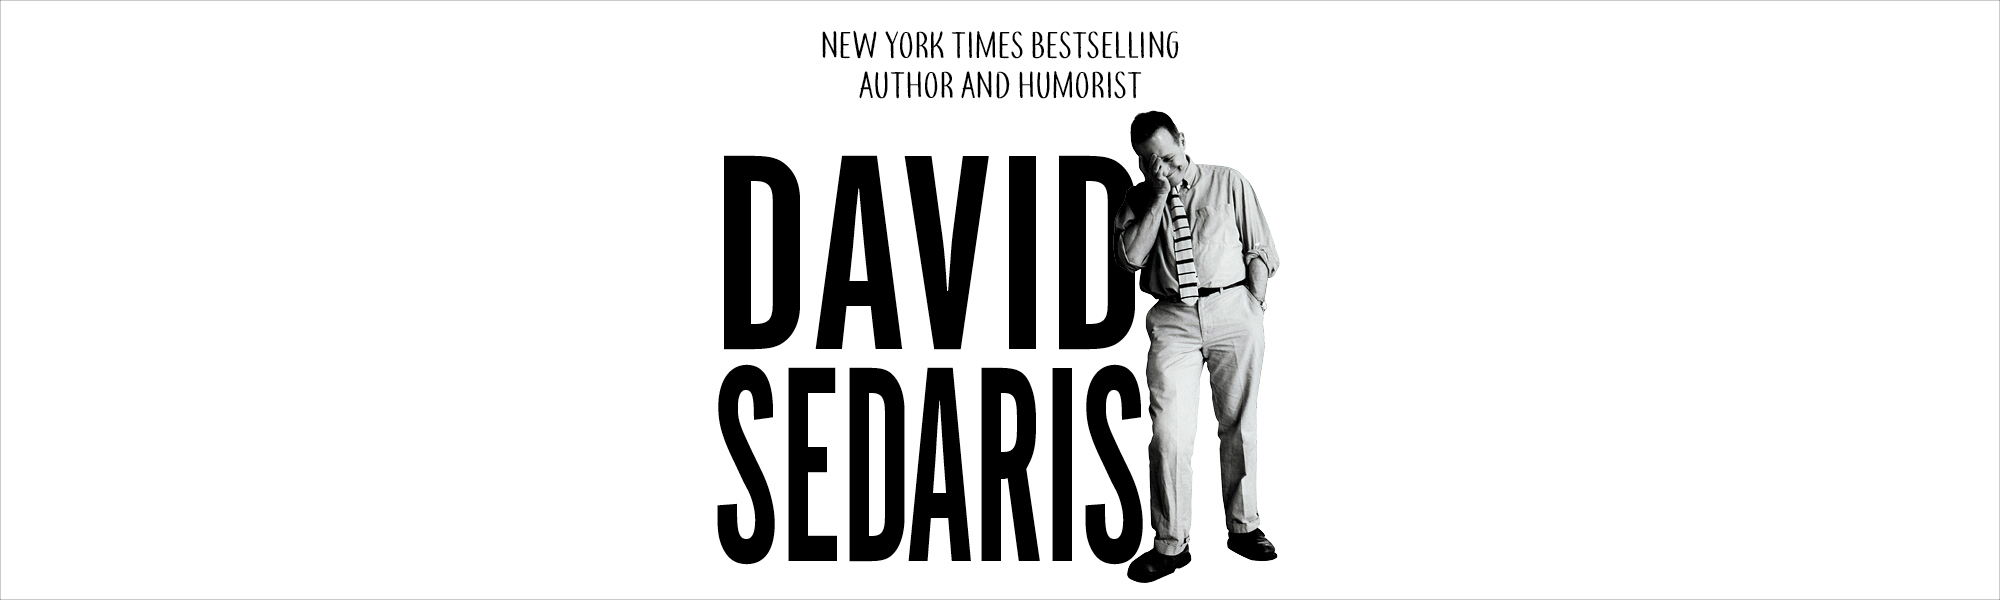 *Facebook Friday Freebie! Win 2 Tickets to ‘An Evening with David Sedaris